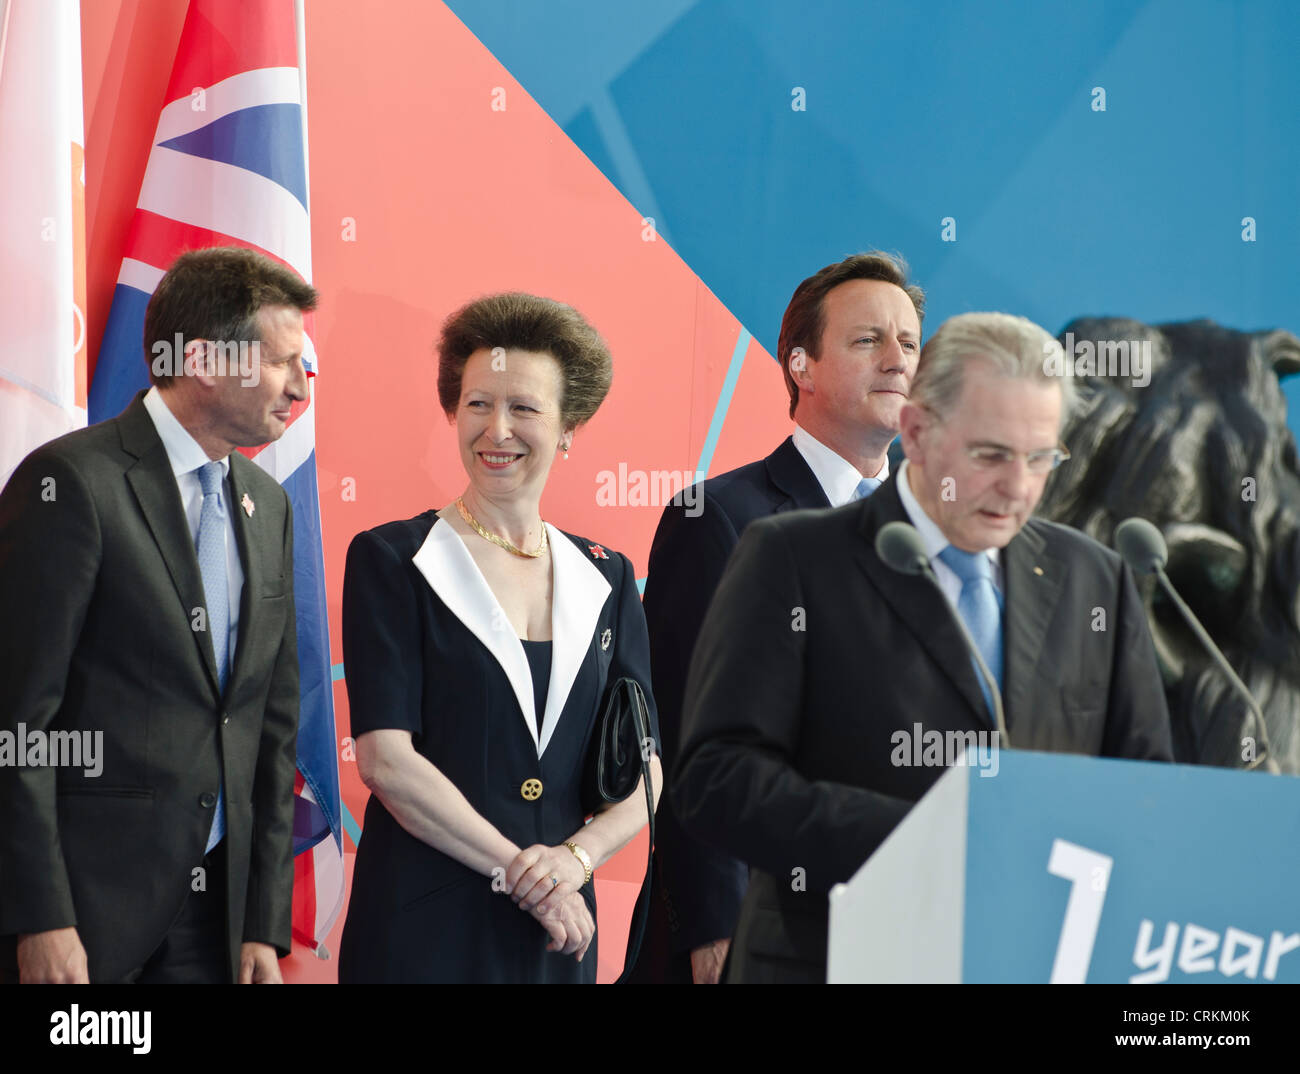 Jacques Rogge President IOCC Cameron Princess Royal Lord Coe "1 Jahr vor" London 2012 Olympics Trafalgar Square Stockfoto